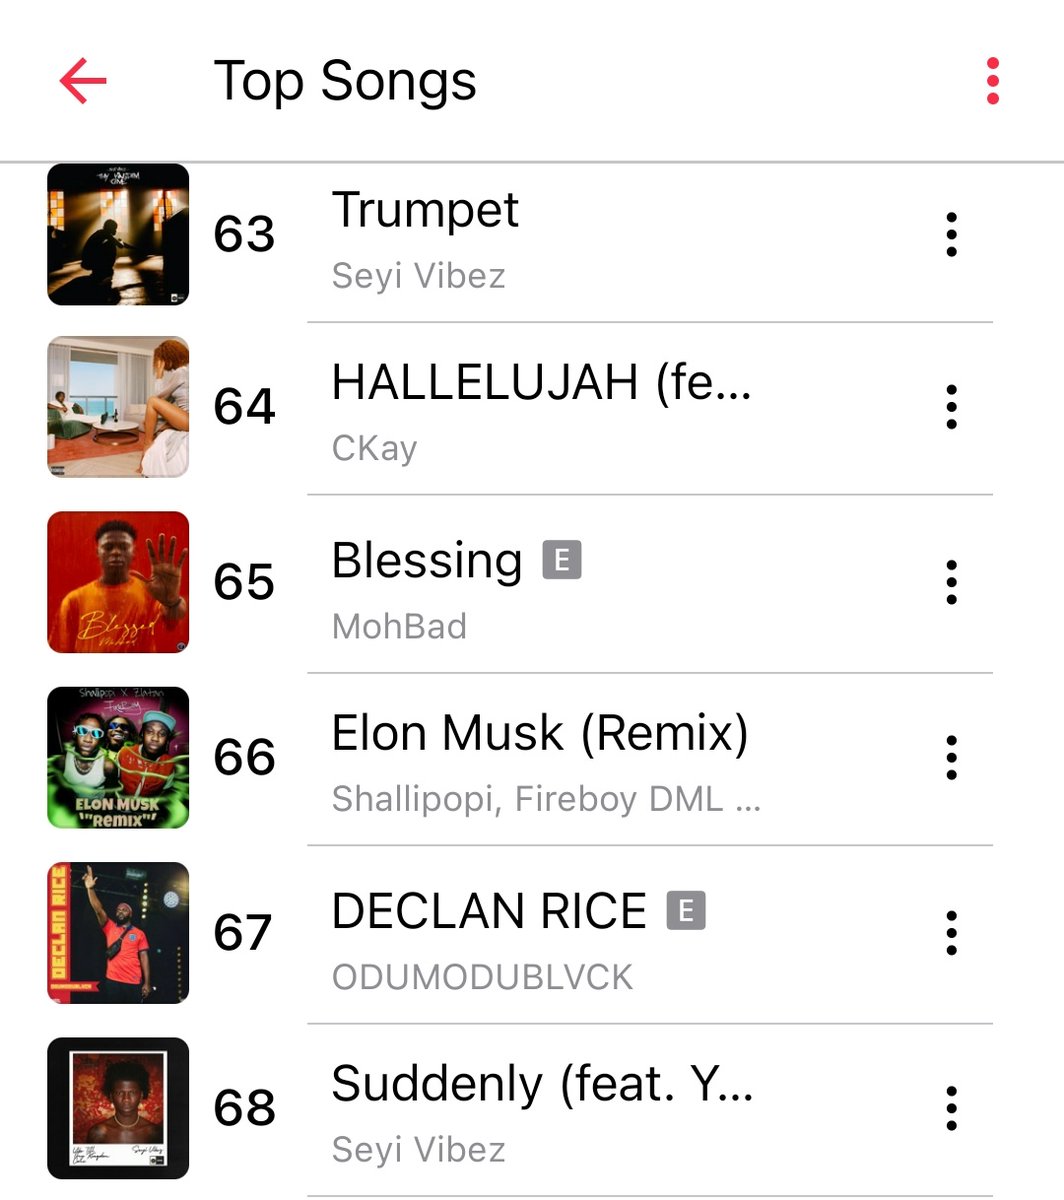 Elon Musk remix by Shallipopi ft Fireboy DML & Zlatan peaks at number 66⬆️ on Apple music 🇳🇬 chart